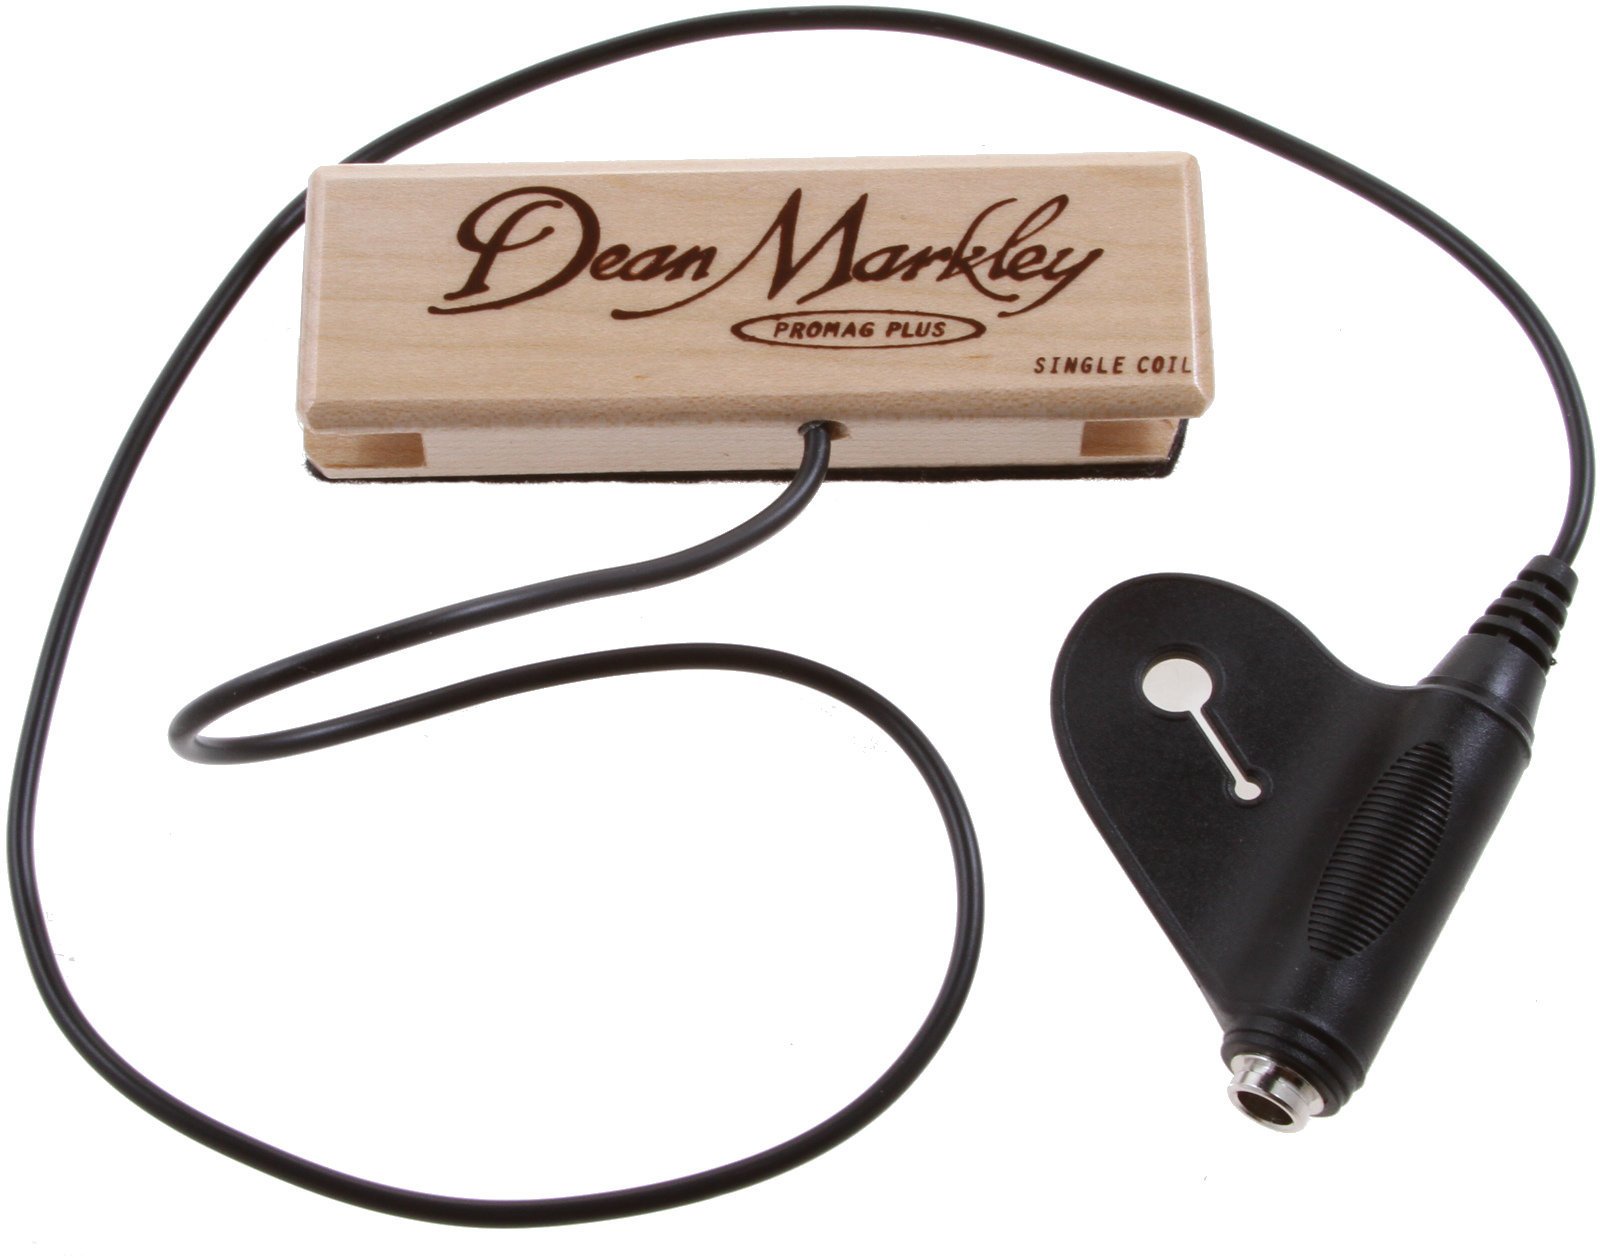 Tonabnehmer für Akustikgitarre Dean Markley 3011 ProMag Plus XM